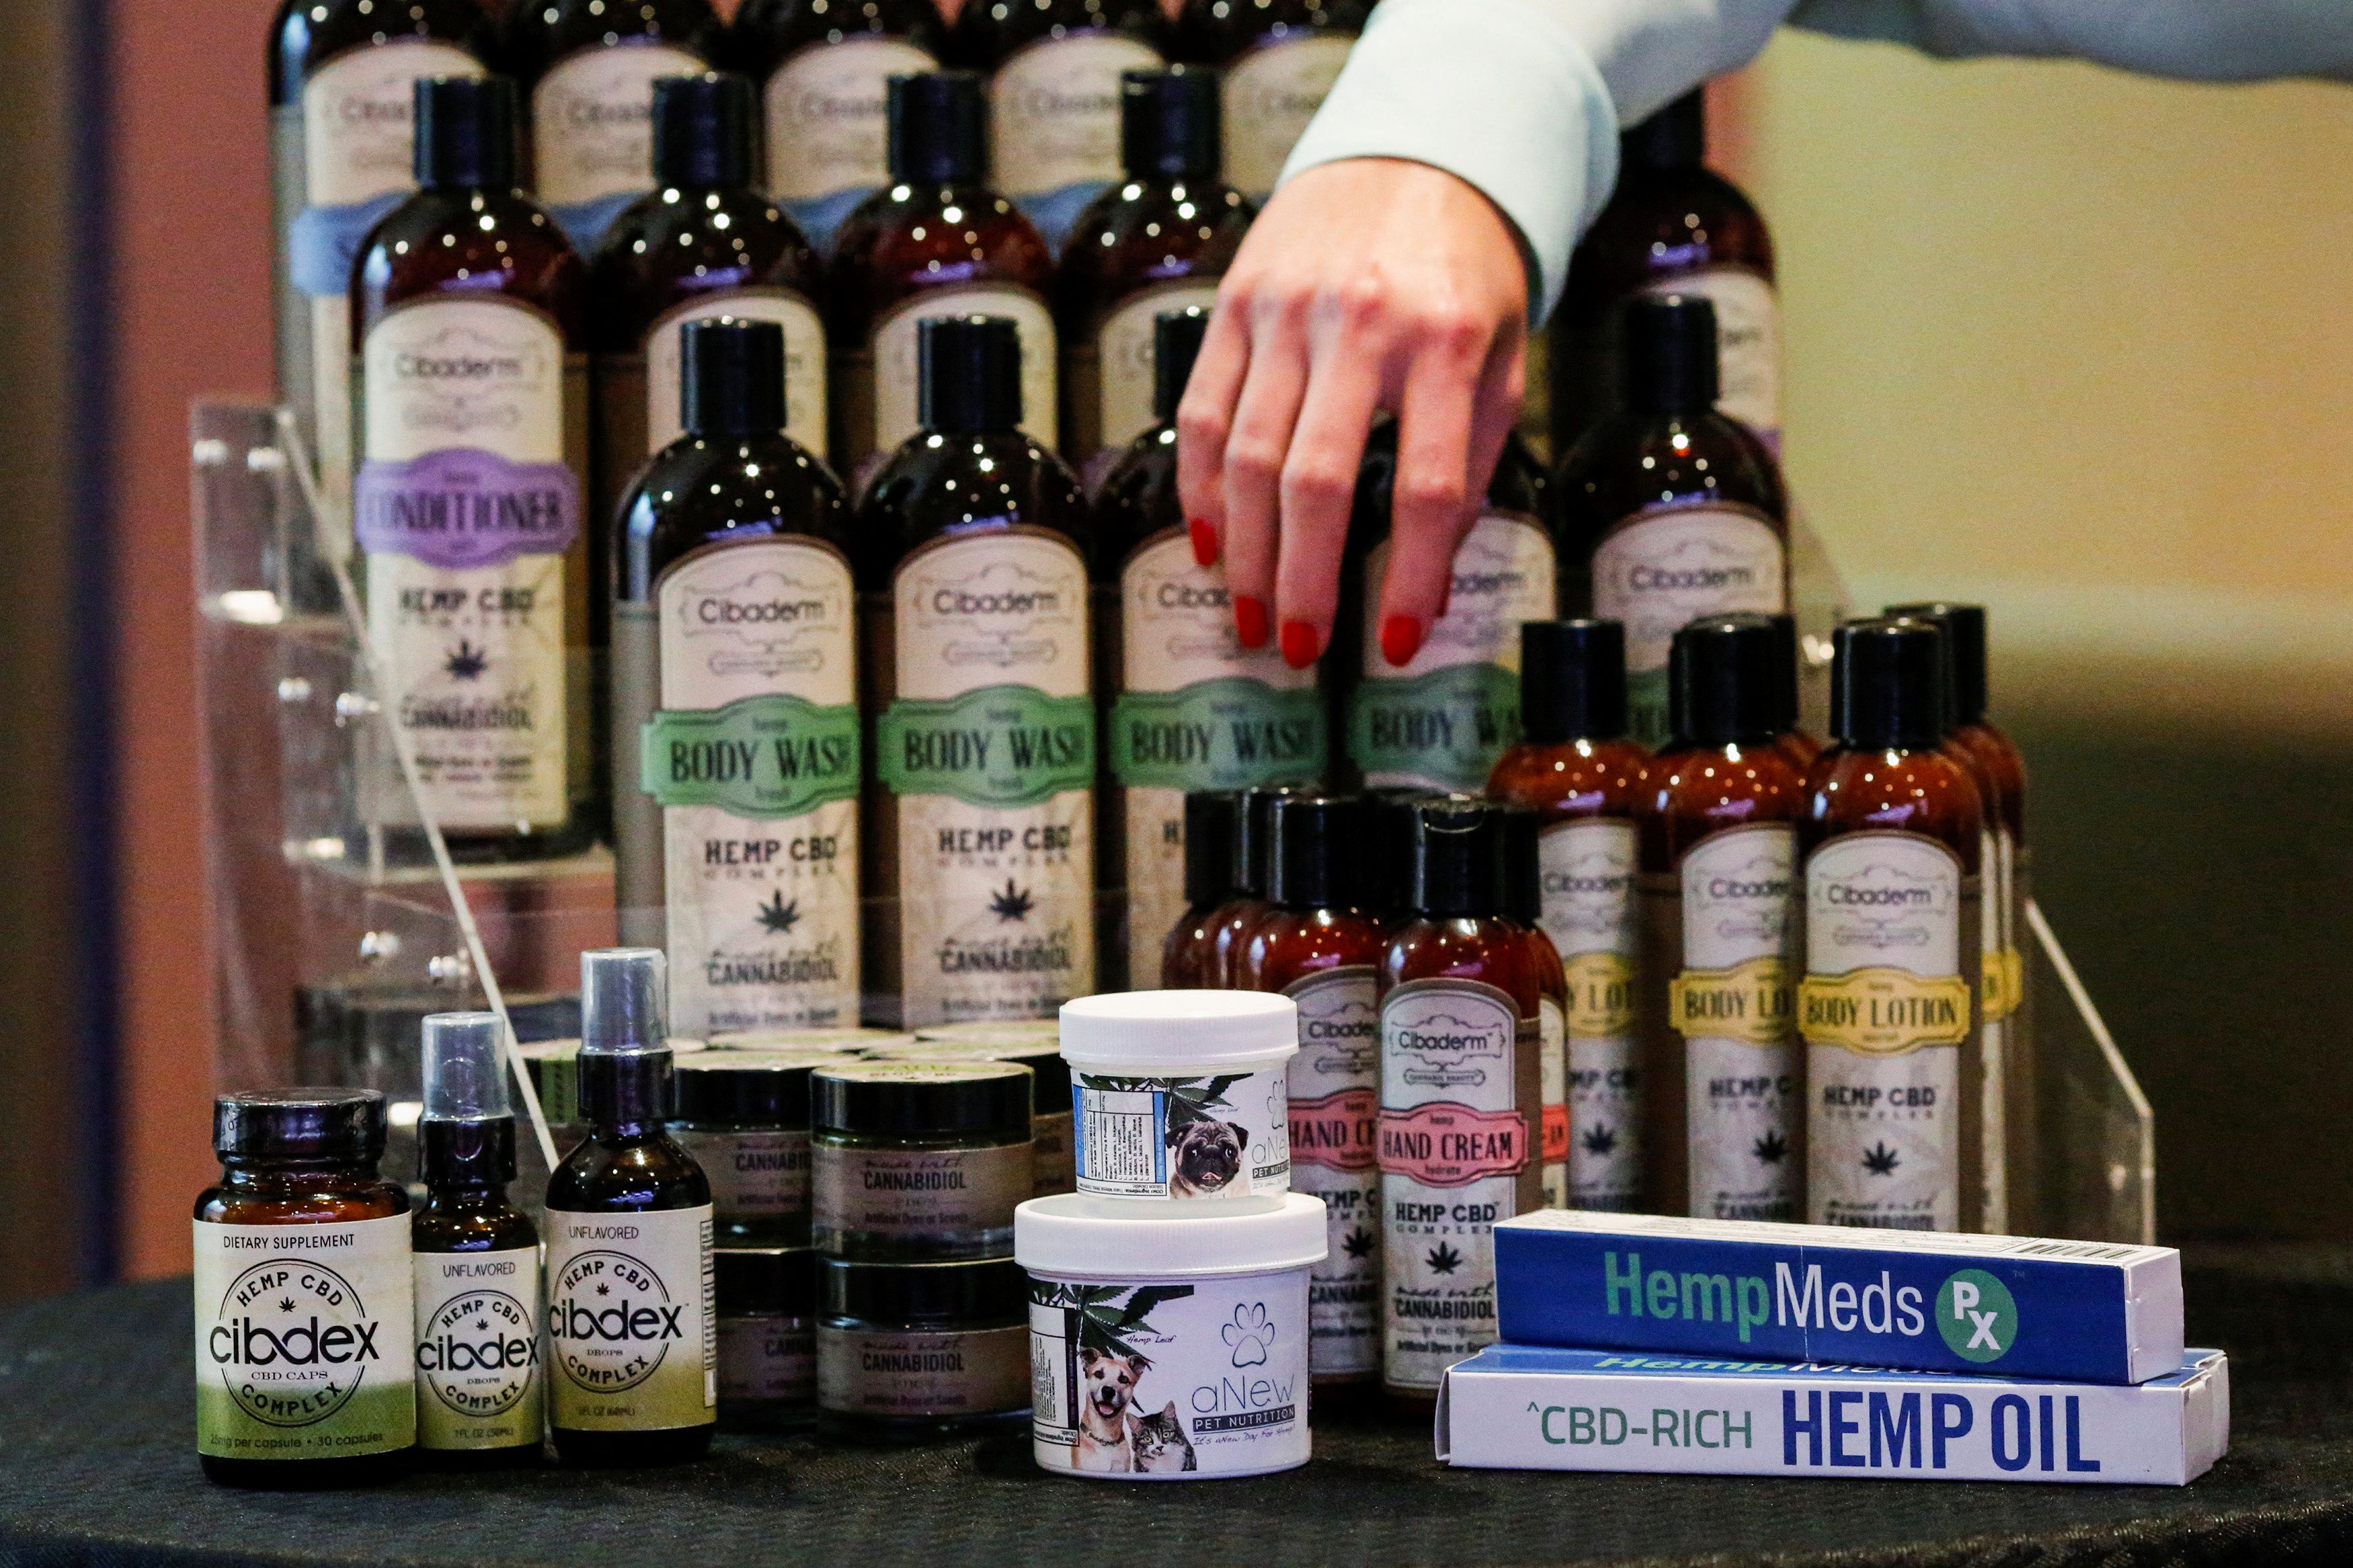 Cannabidiol (CBD) hemp products are seen during the International Cannabis Association Convention in New York